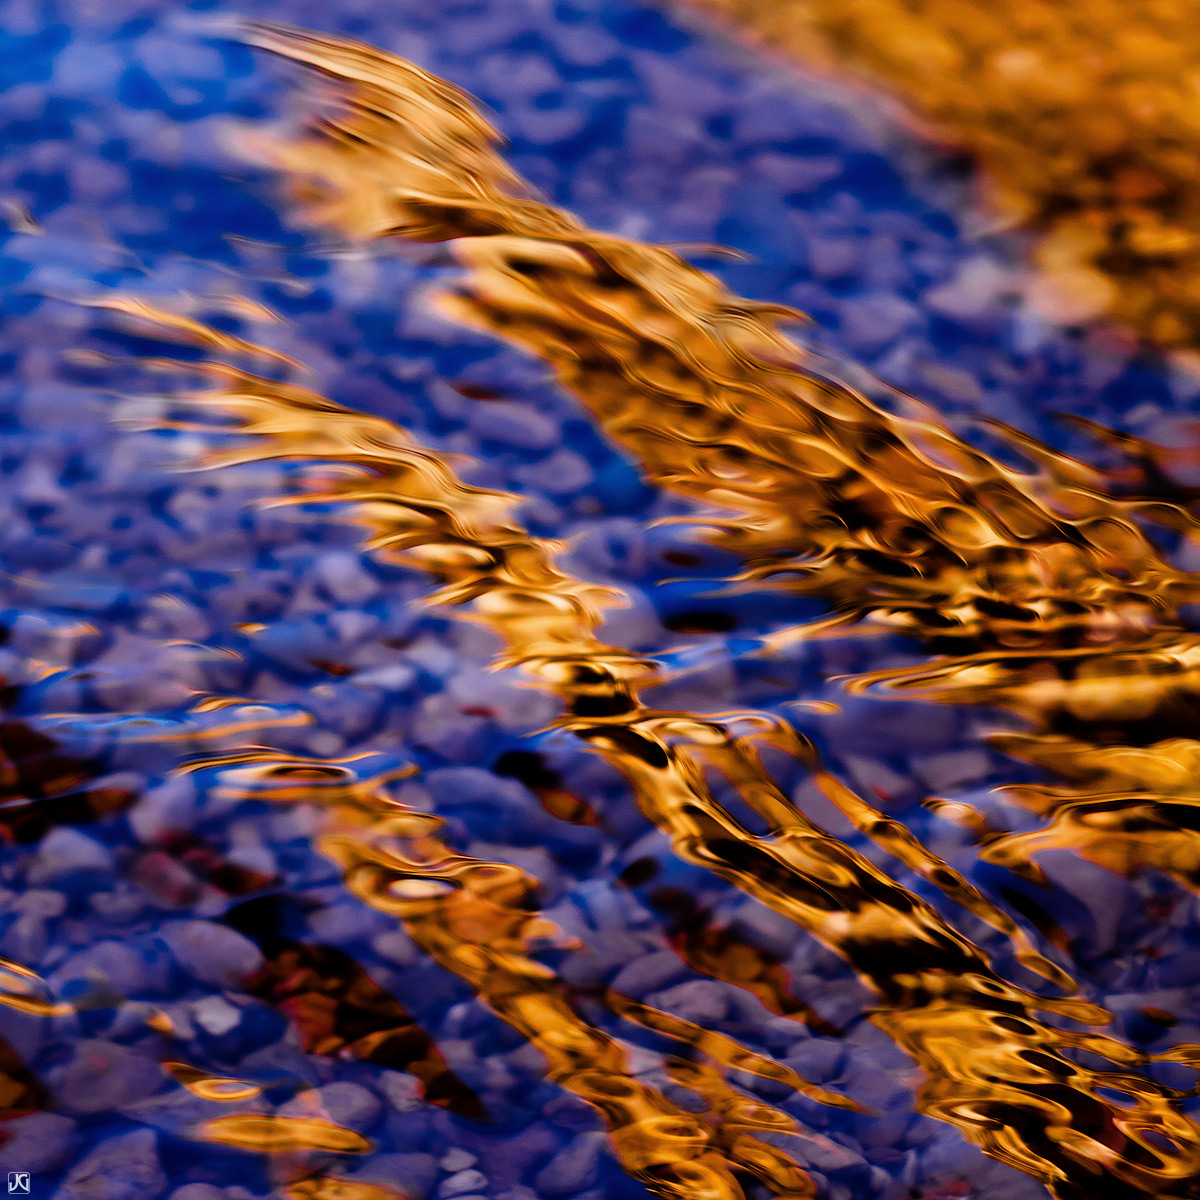 Reflections and ripples on Willis Creek, Utah.